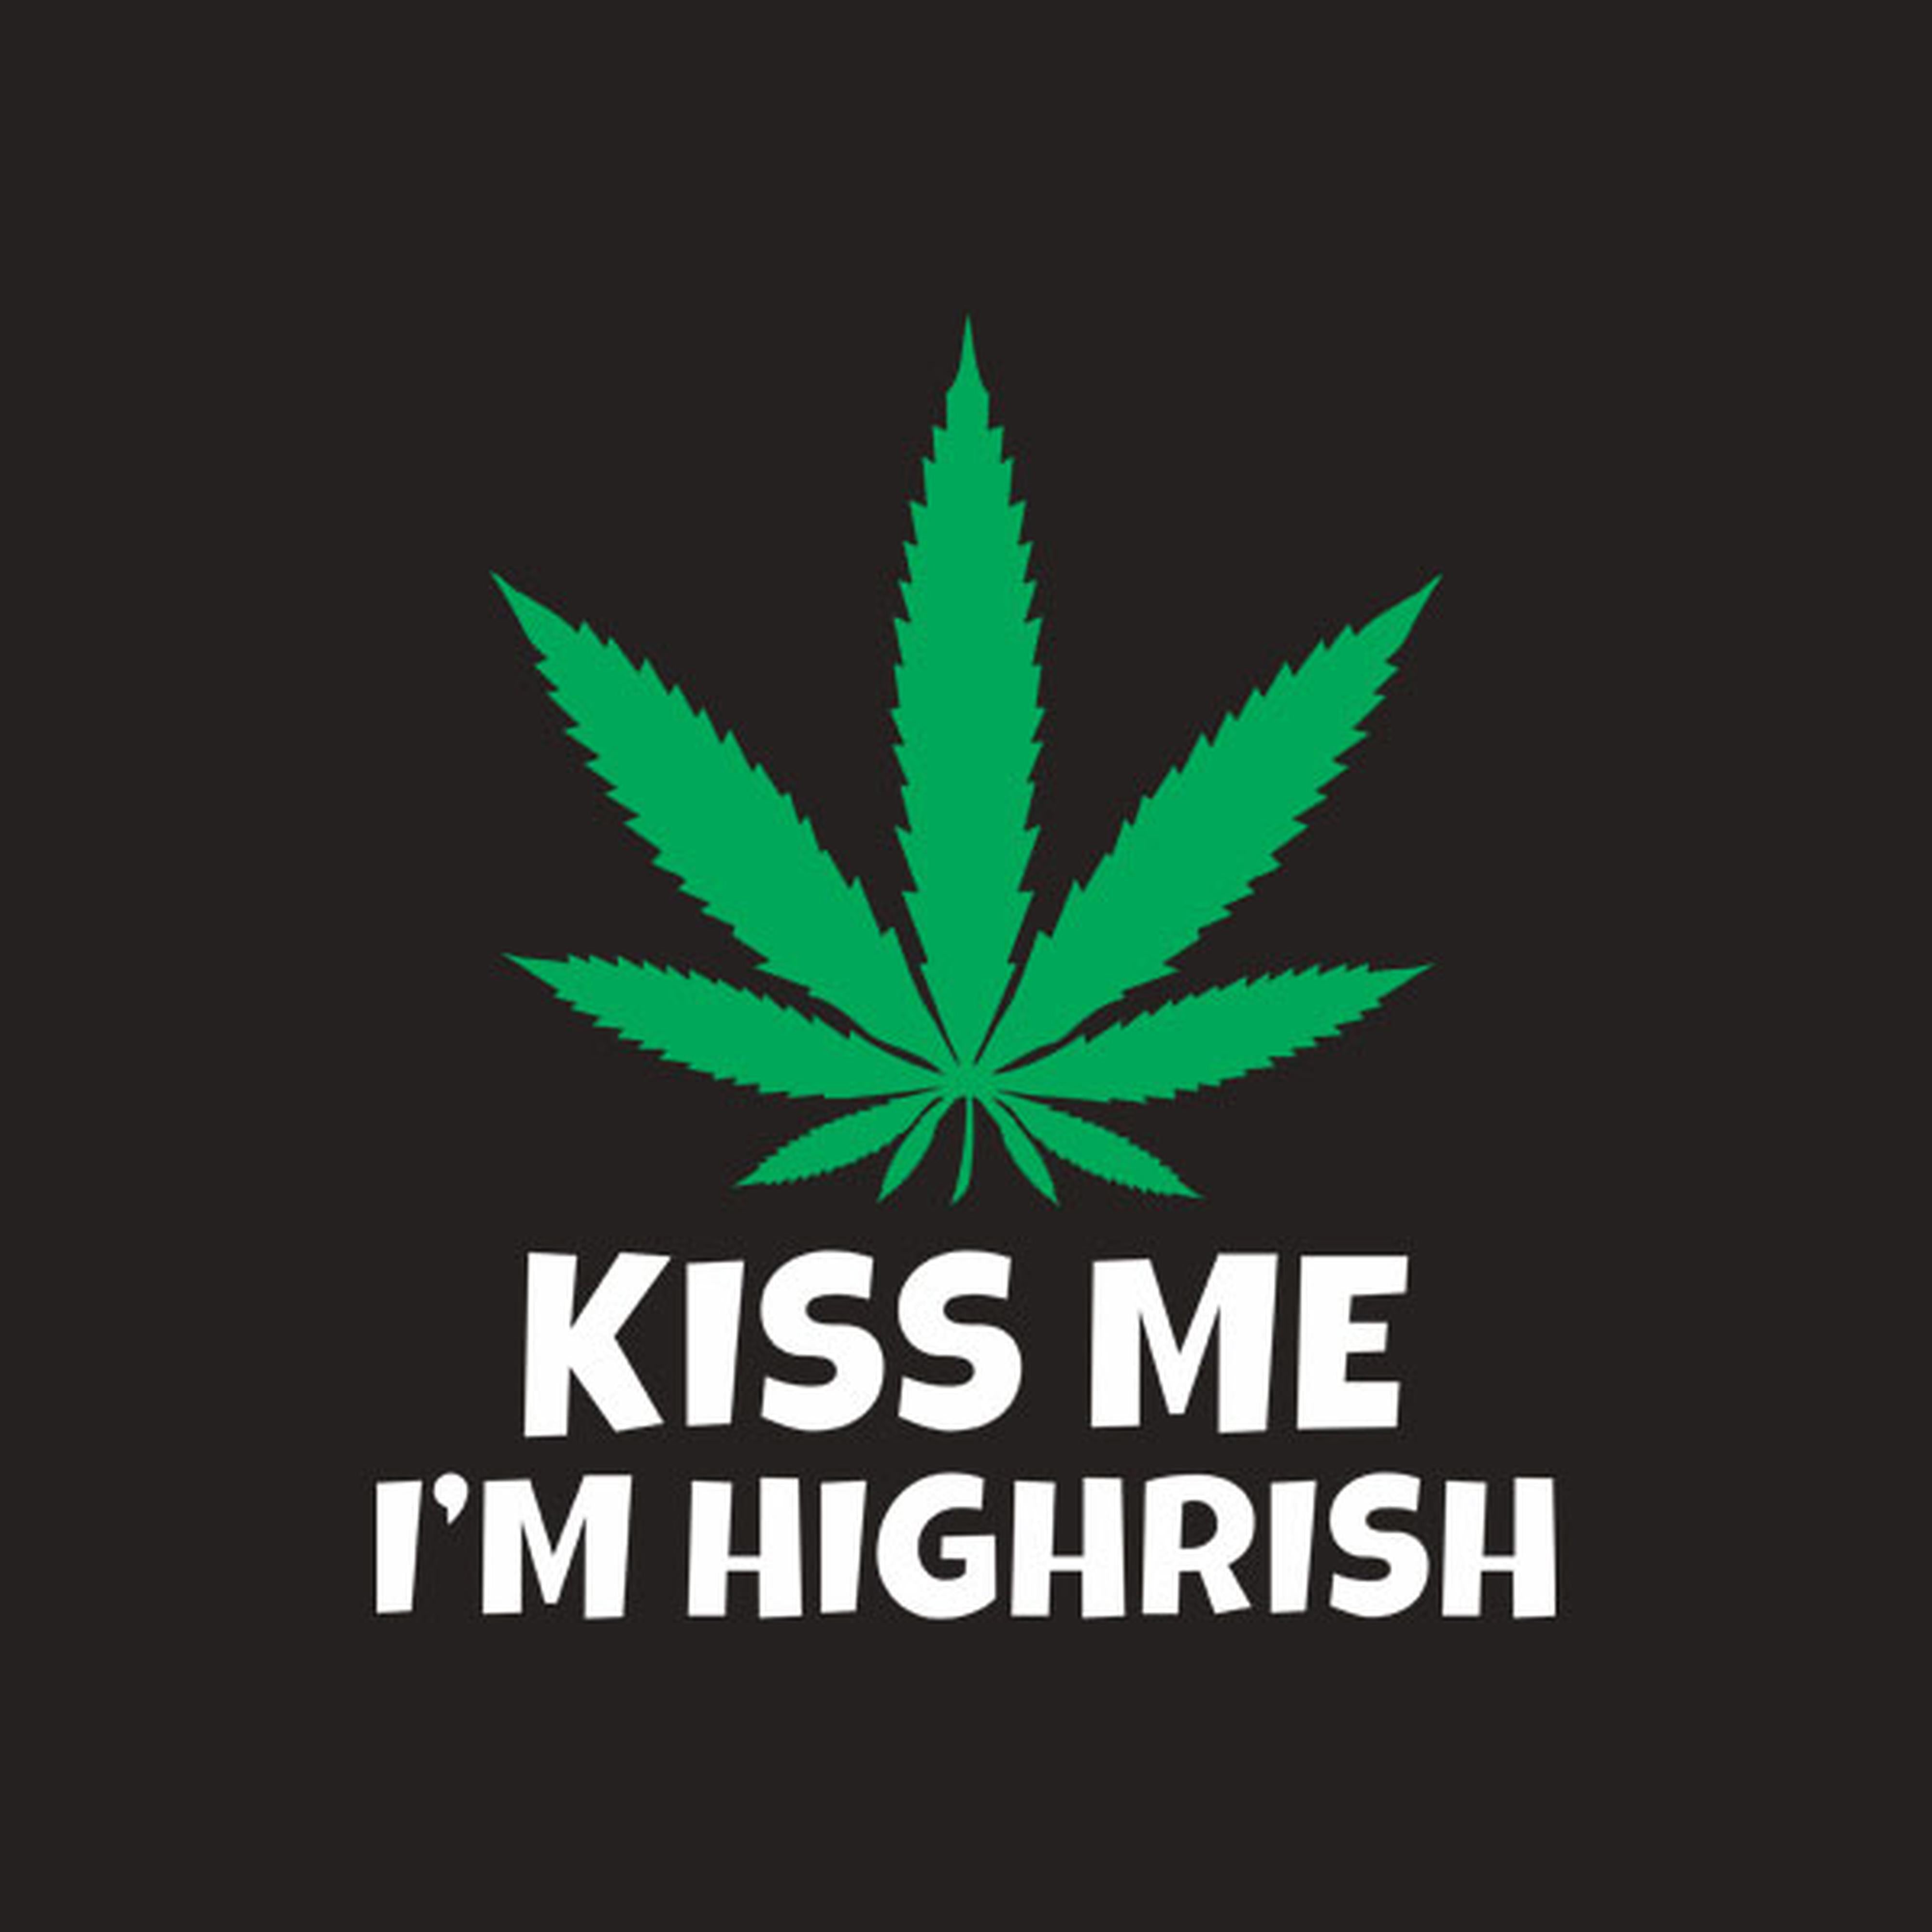 Kiss me, I'm highrish - T-shirt